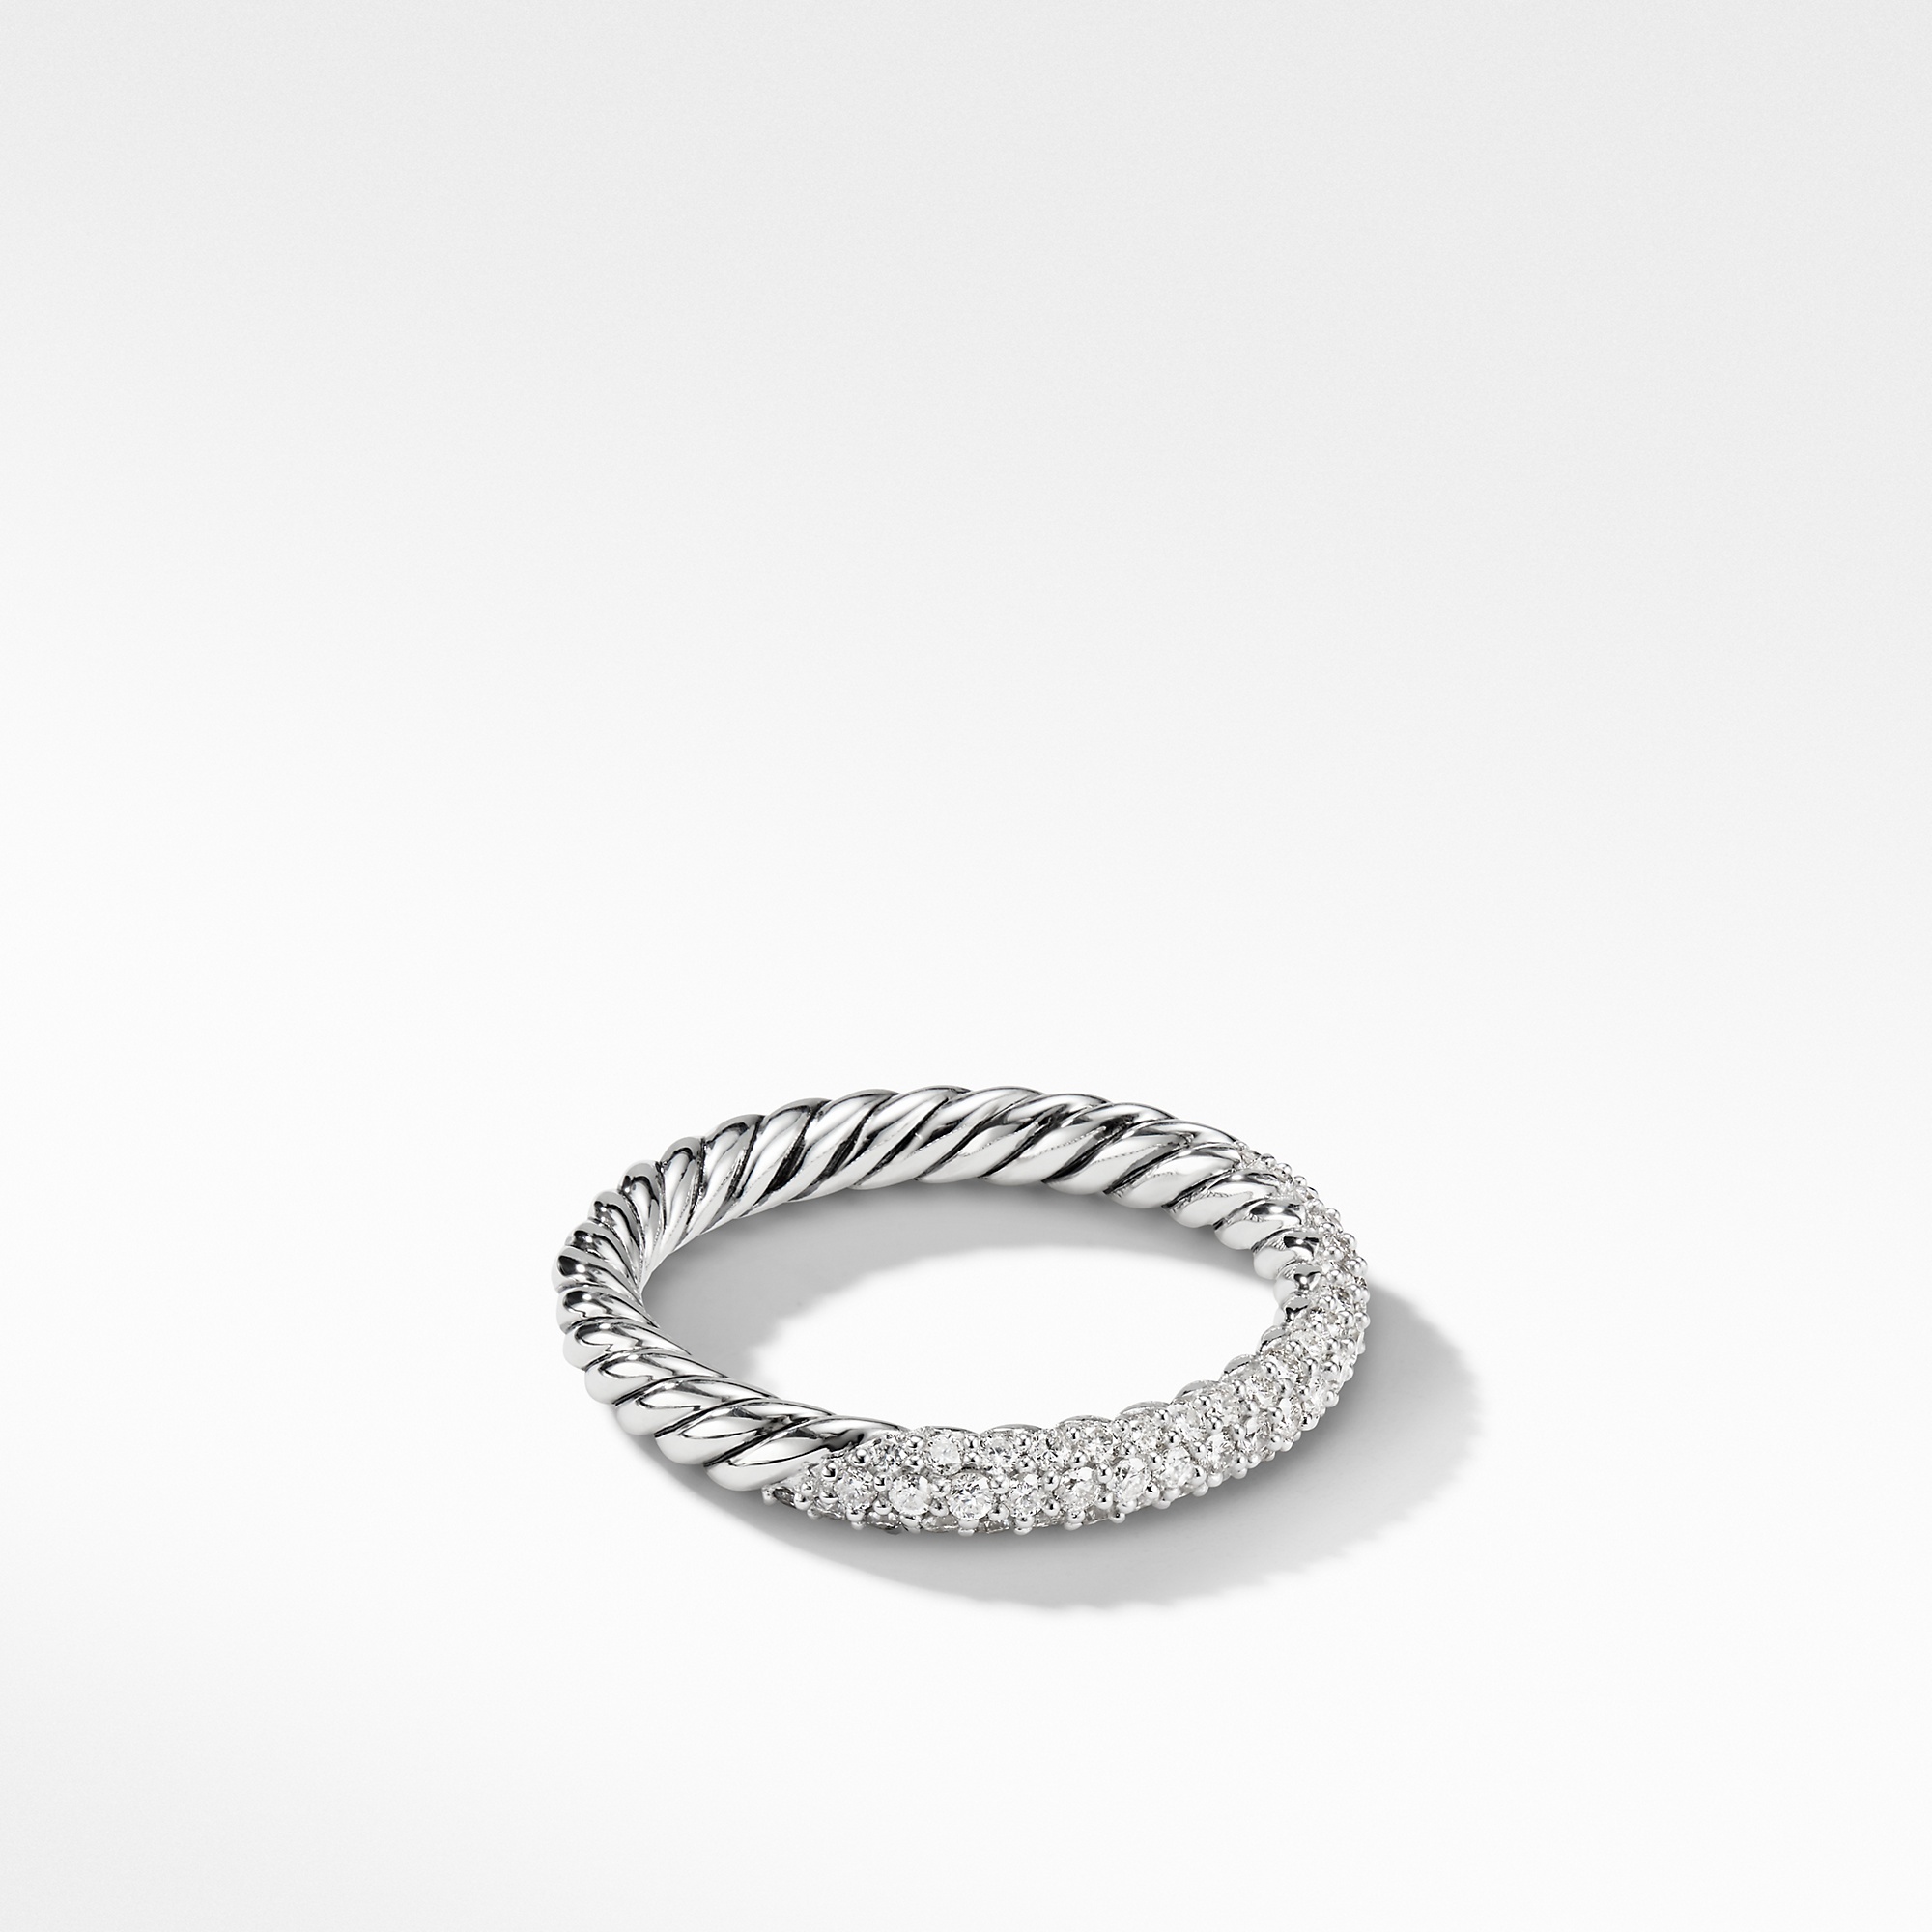 David Yurman Petite Pave Ring with Diamonds, size 6 0